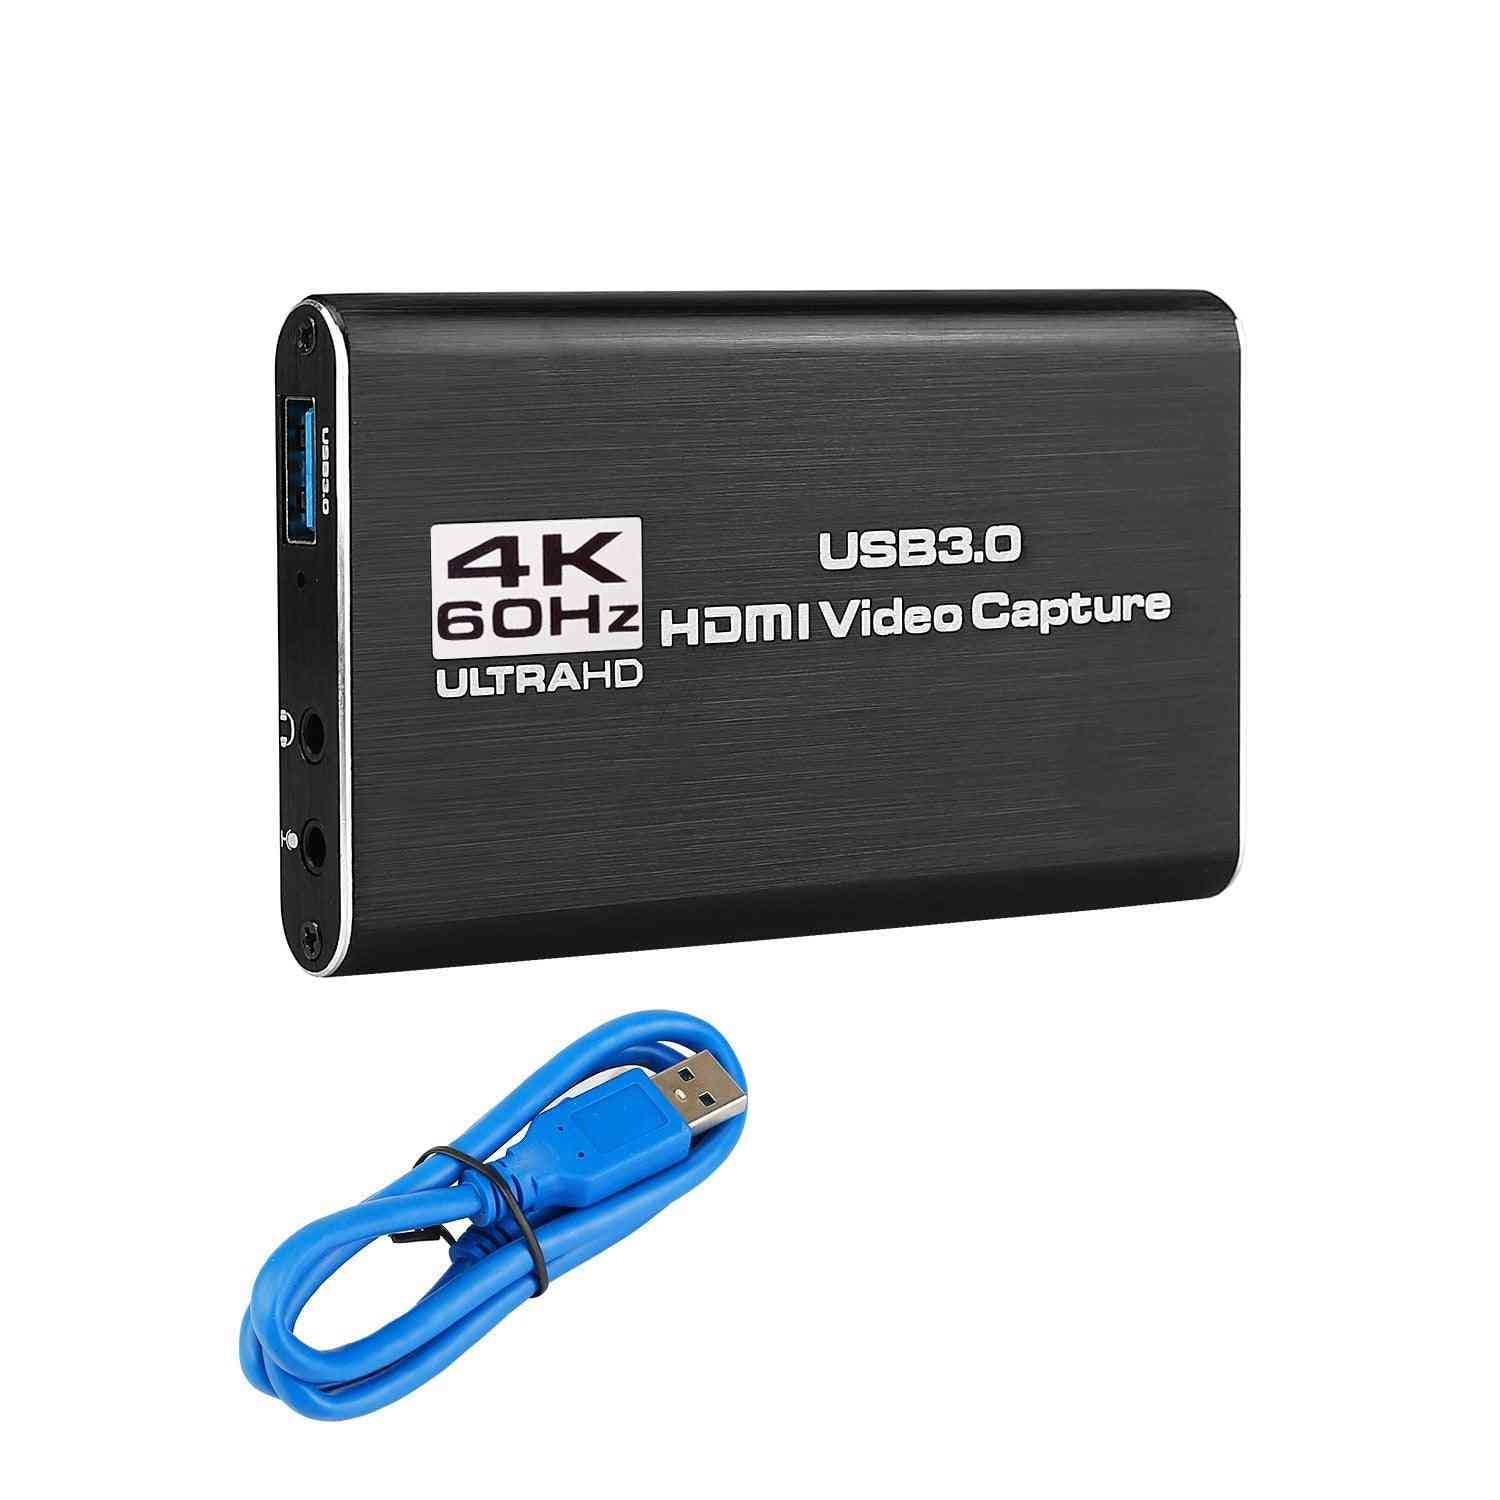 4k60hz Video Capture Hdmi To Usb 3.0